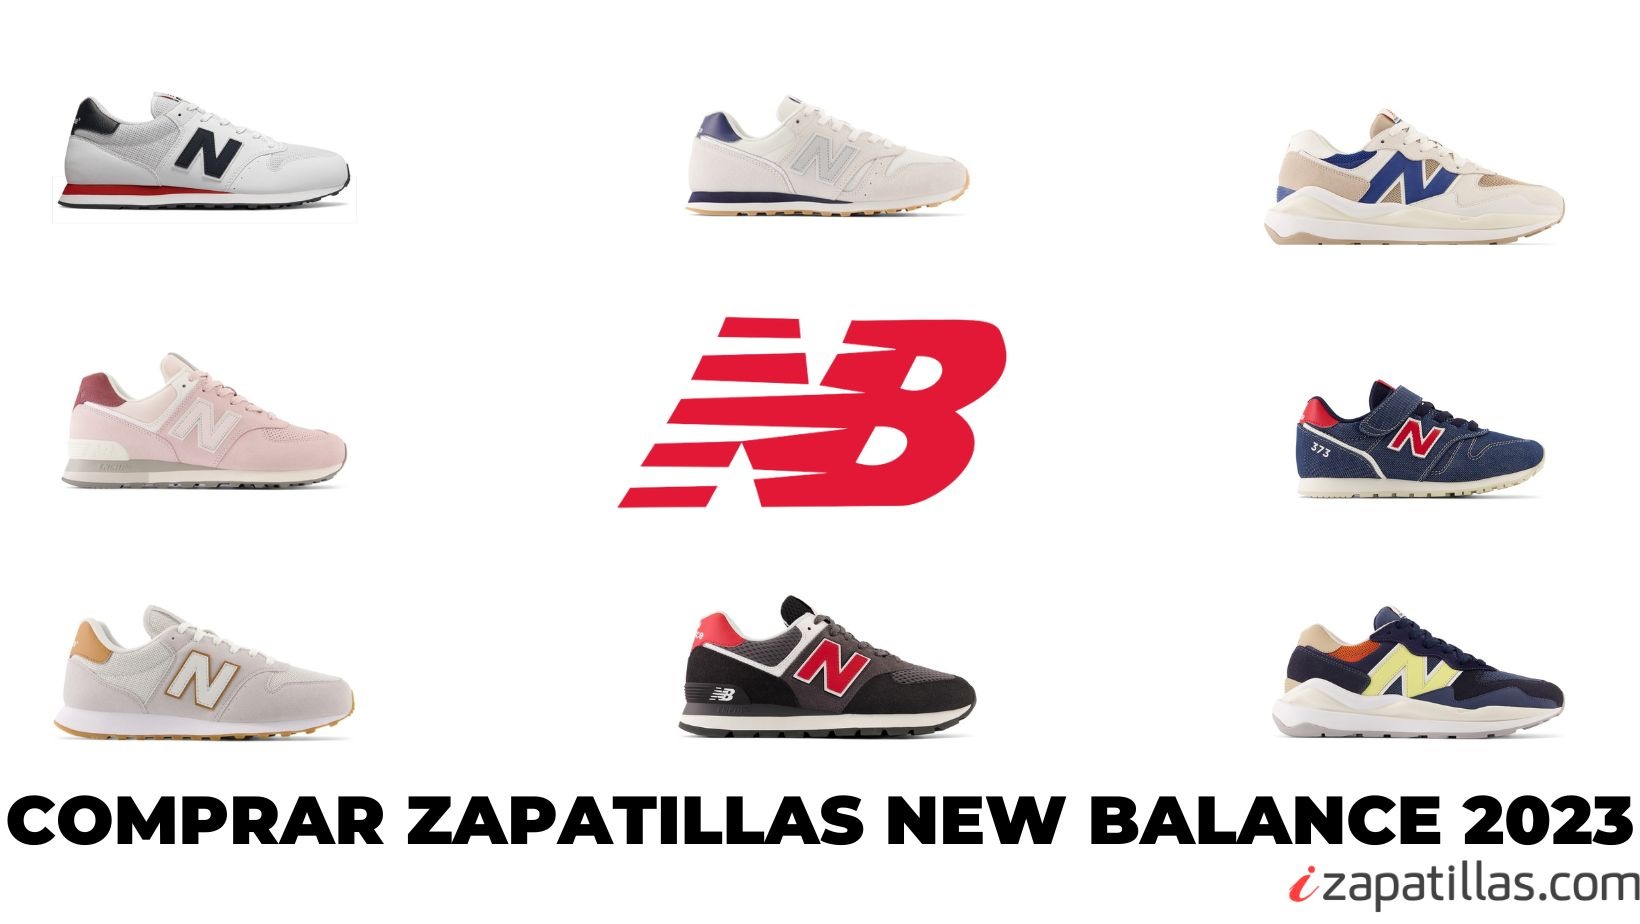 Comprar Zapatillas New Balance 2023 Comprar Zapatillas New Balance baratas // Comprar Zapatillas New Balance online.